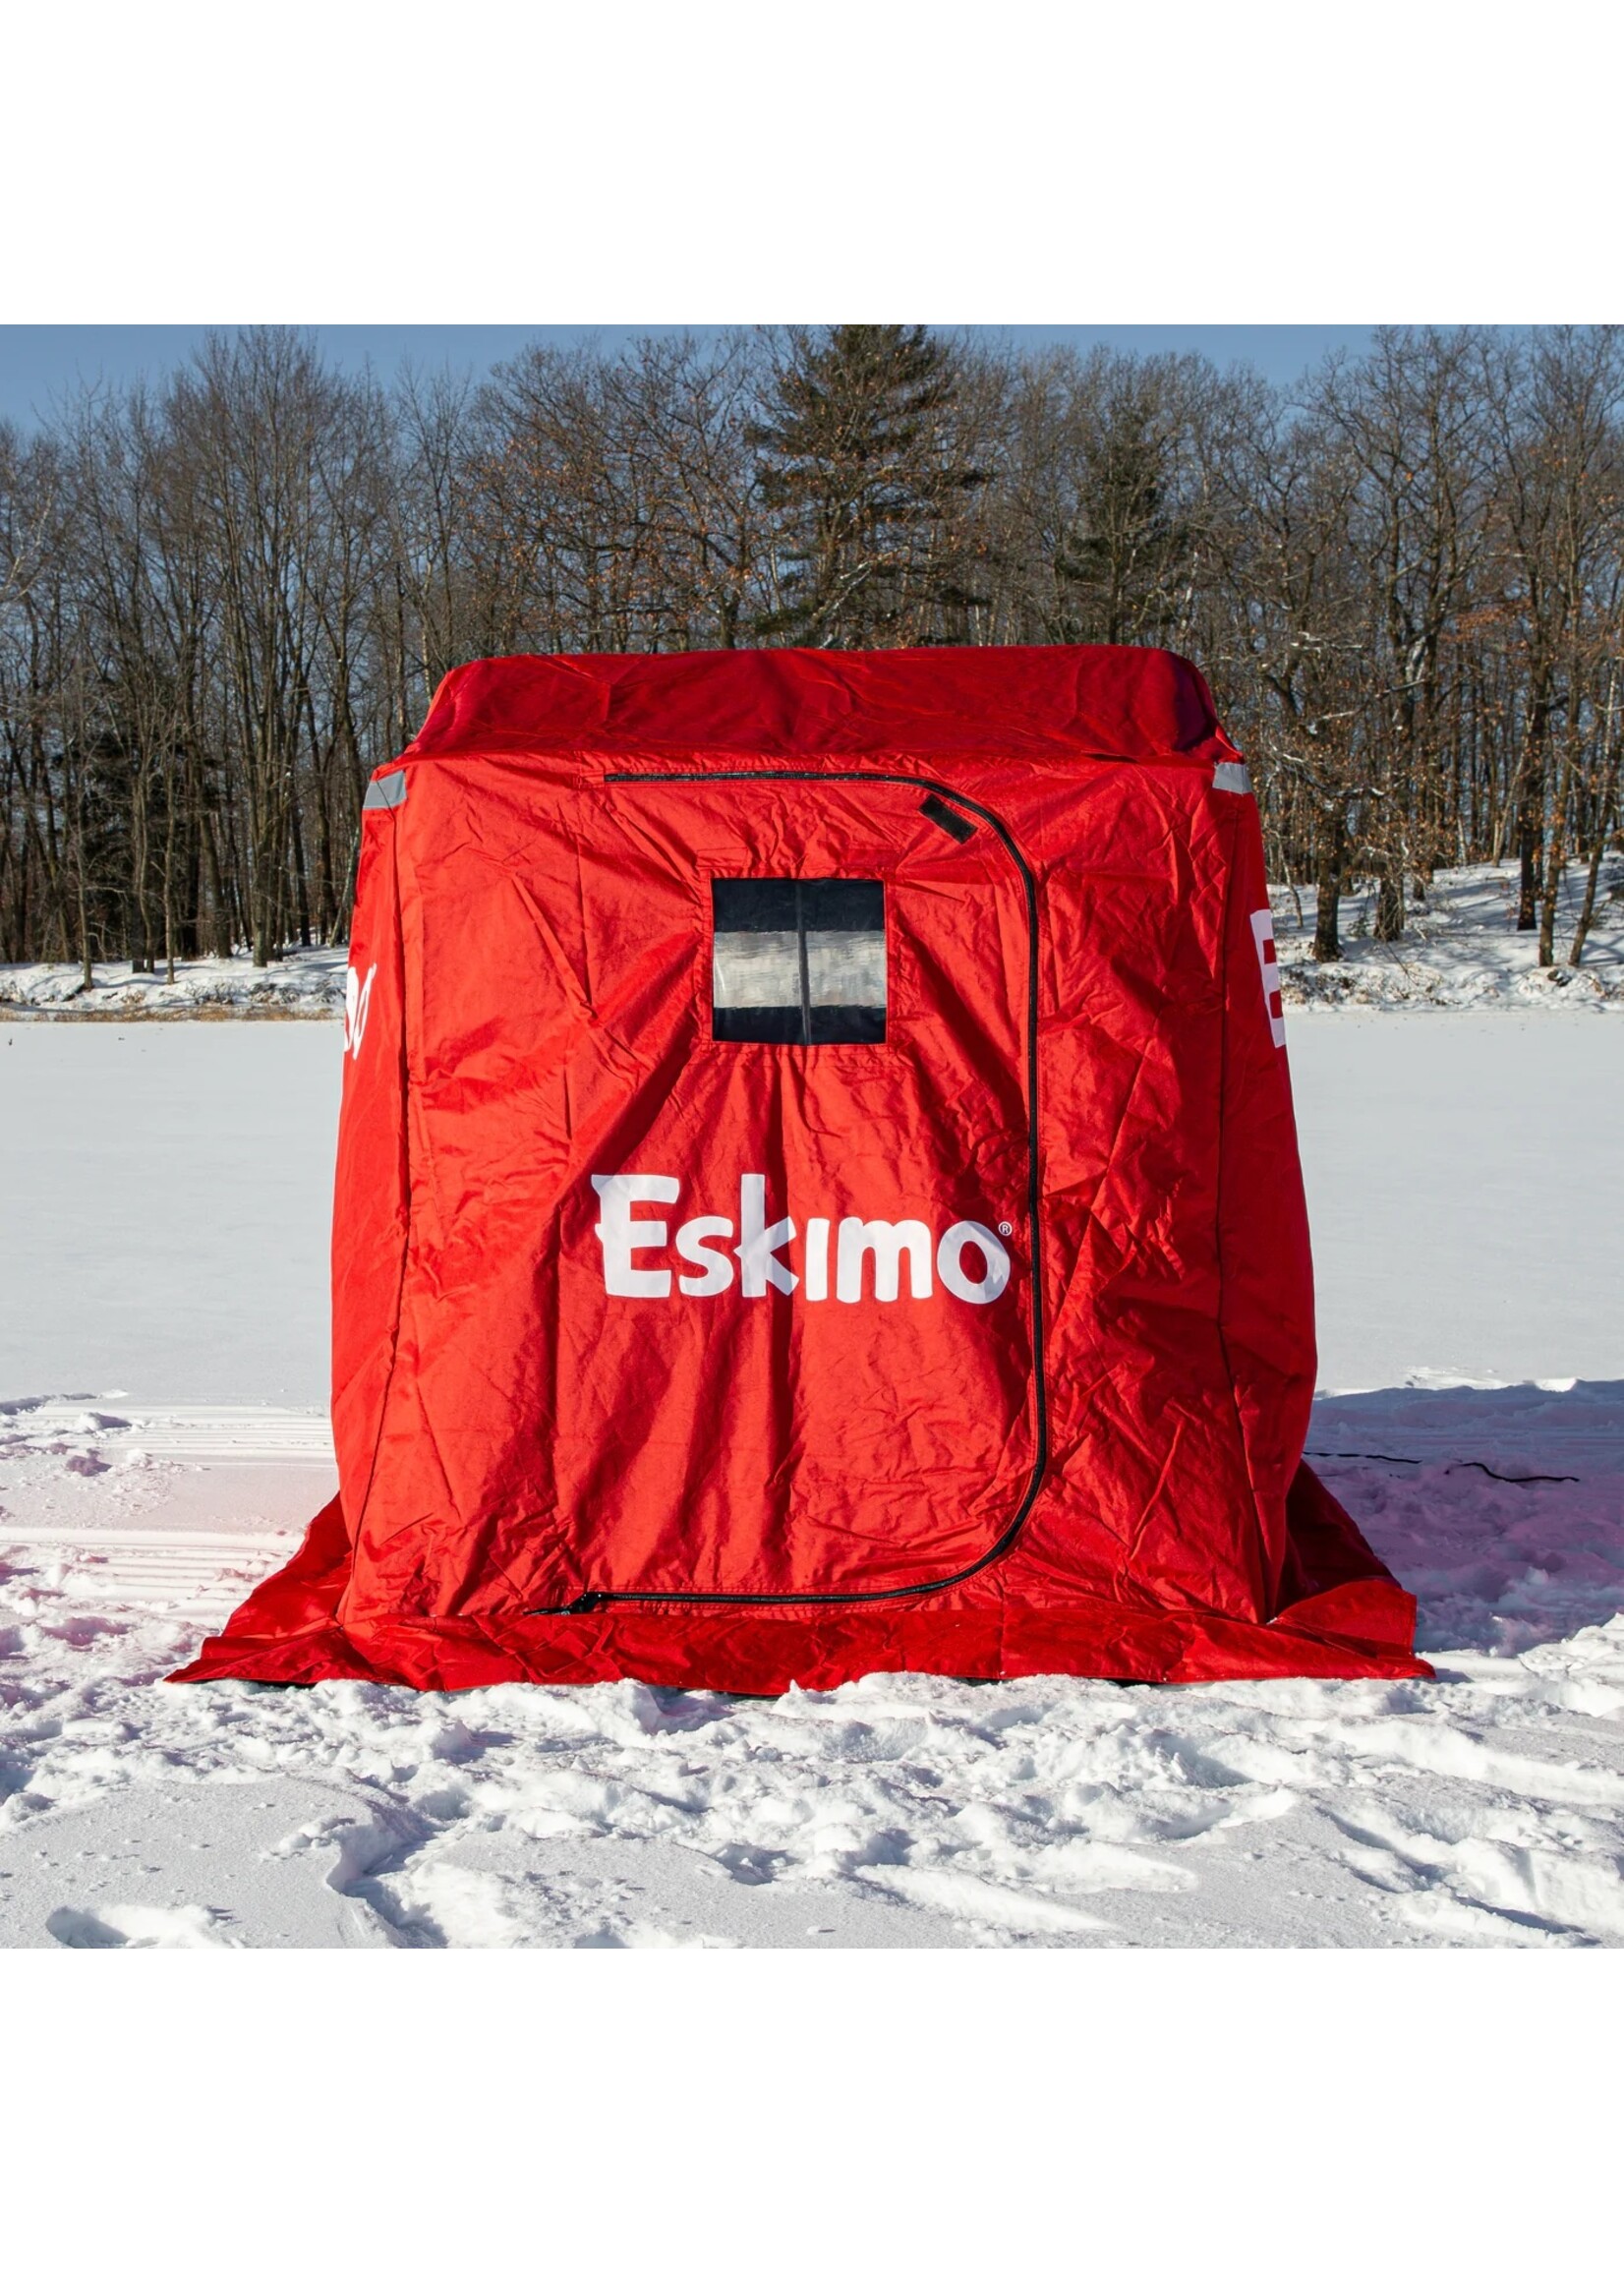 Eskimo Sierra Ice Shelter